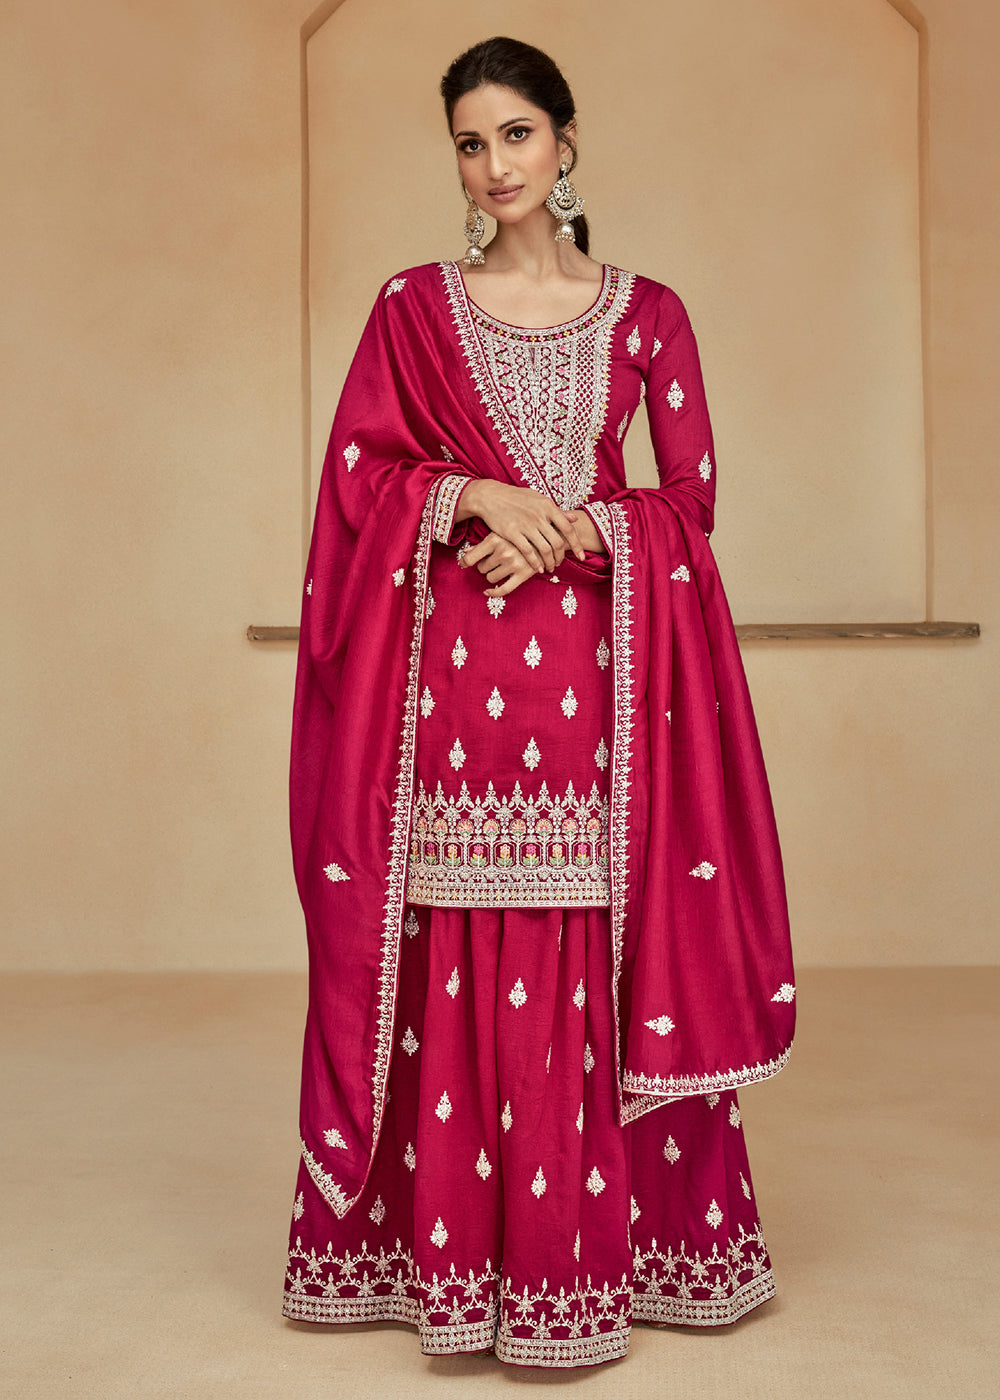 Buy Now Rani Pink Zari & Sequins Work Palazzo Salwar Suit Online in USA, UK, Canada, Germany, Australia & Worldwide at Empress Clothing.